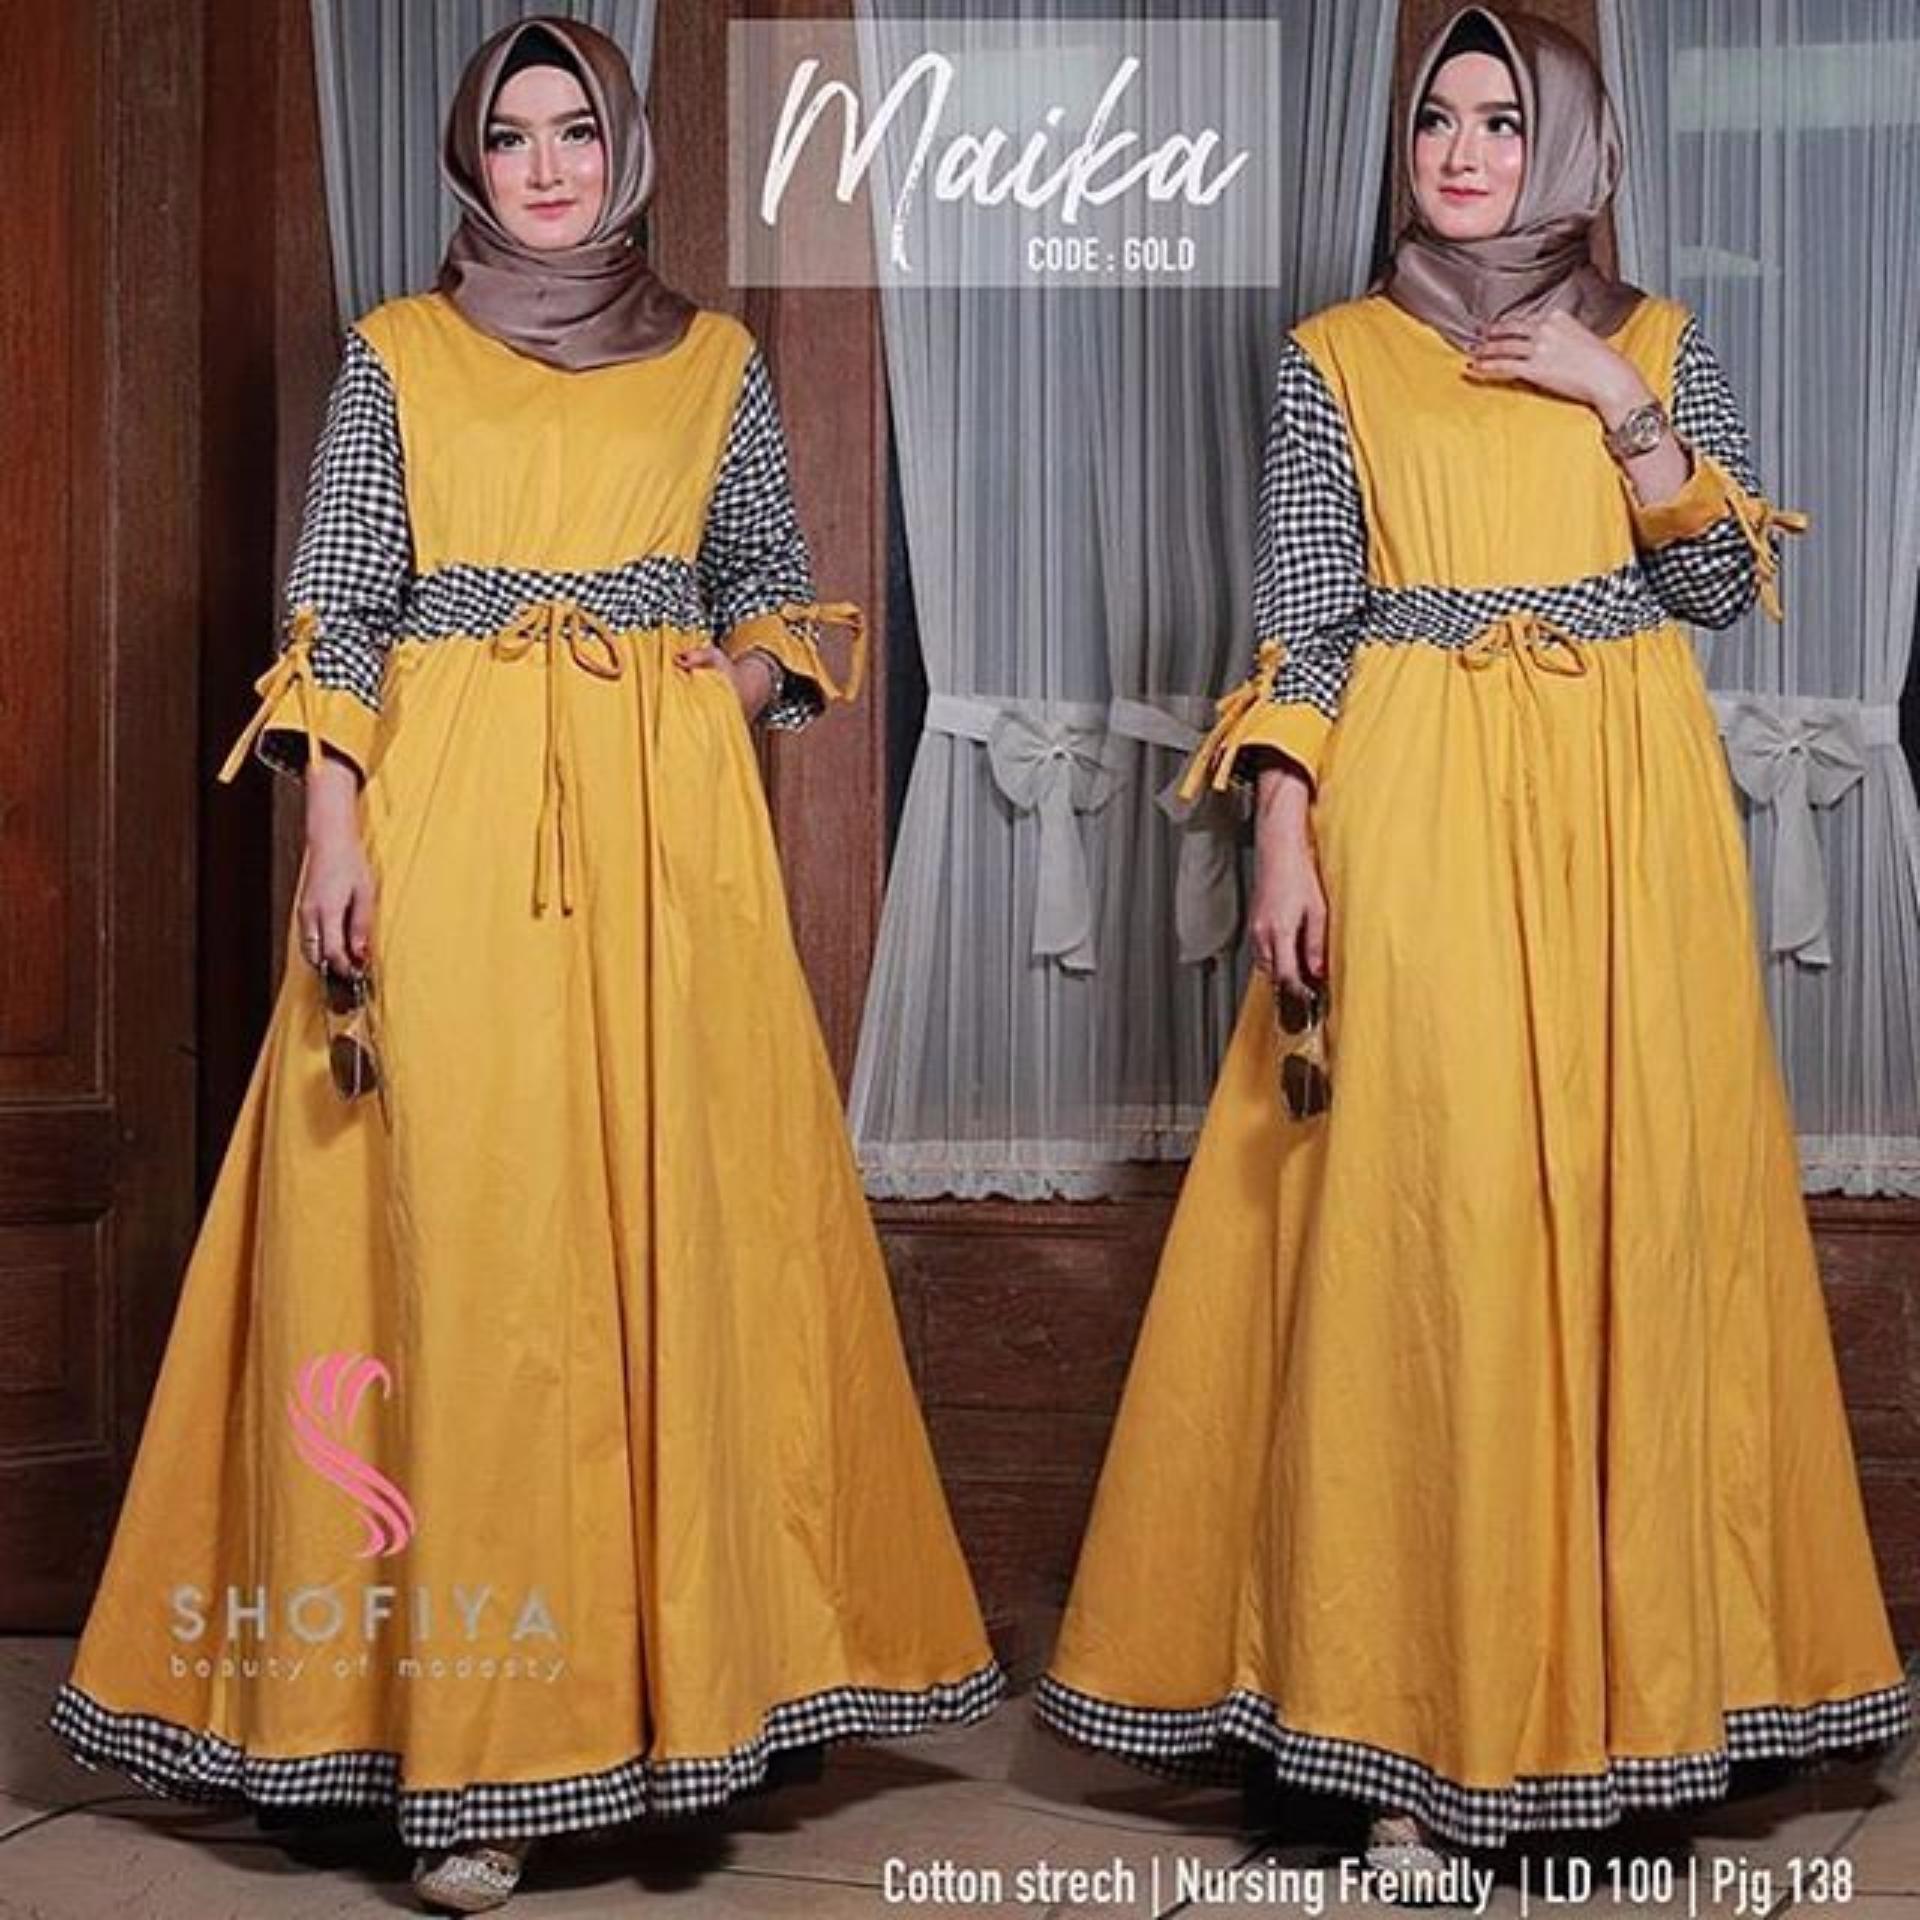 PENAWARAN PROMO Baju Wanita Baju Hijab Baju Gamis Maika Dress Gold